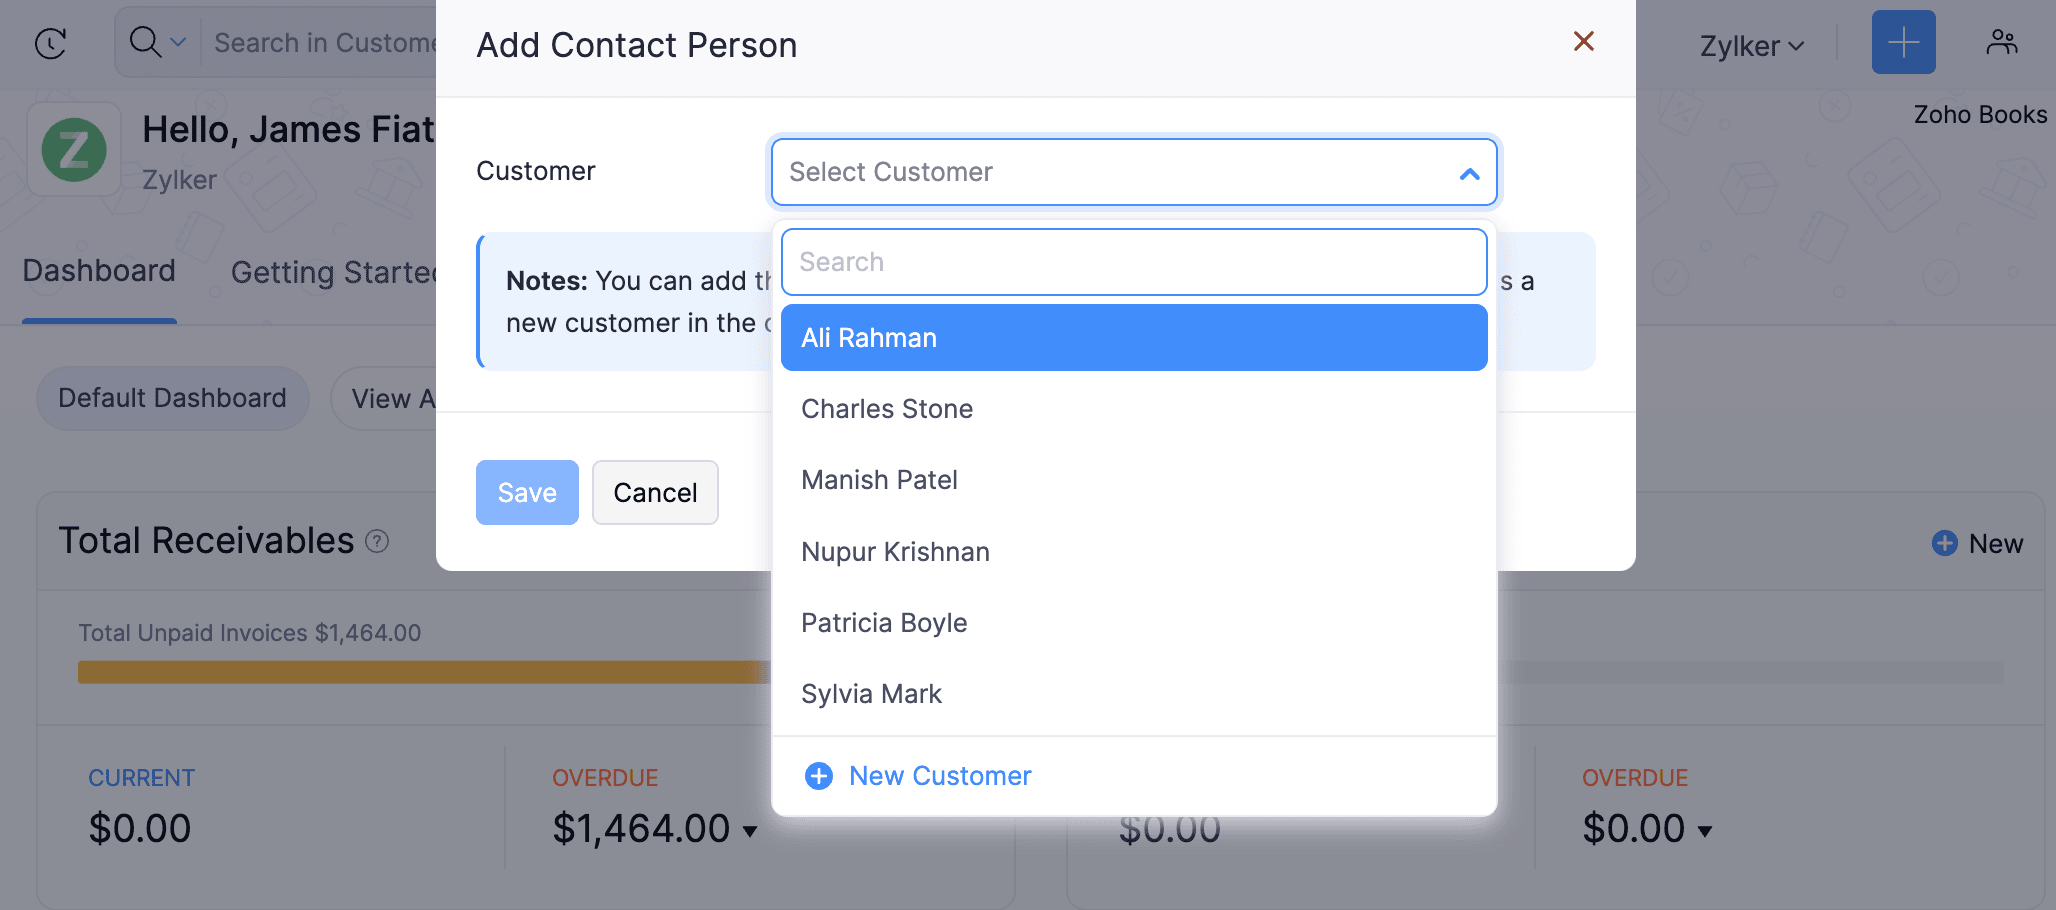 Select Customer